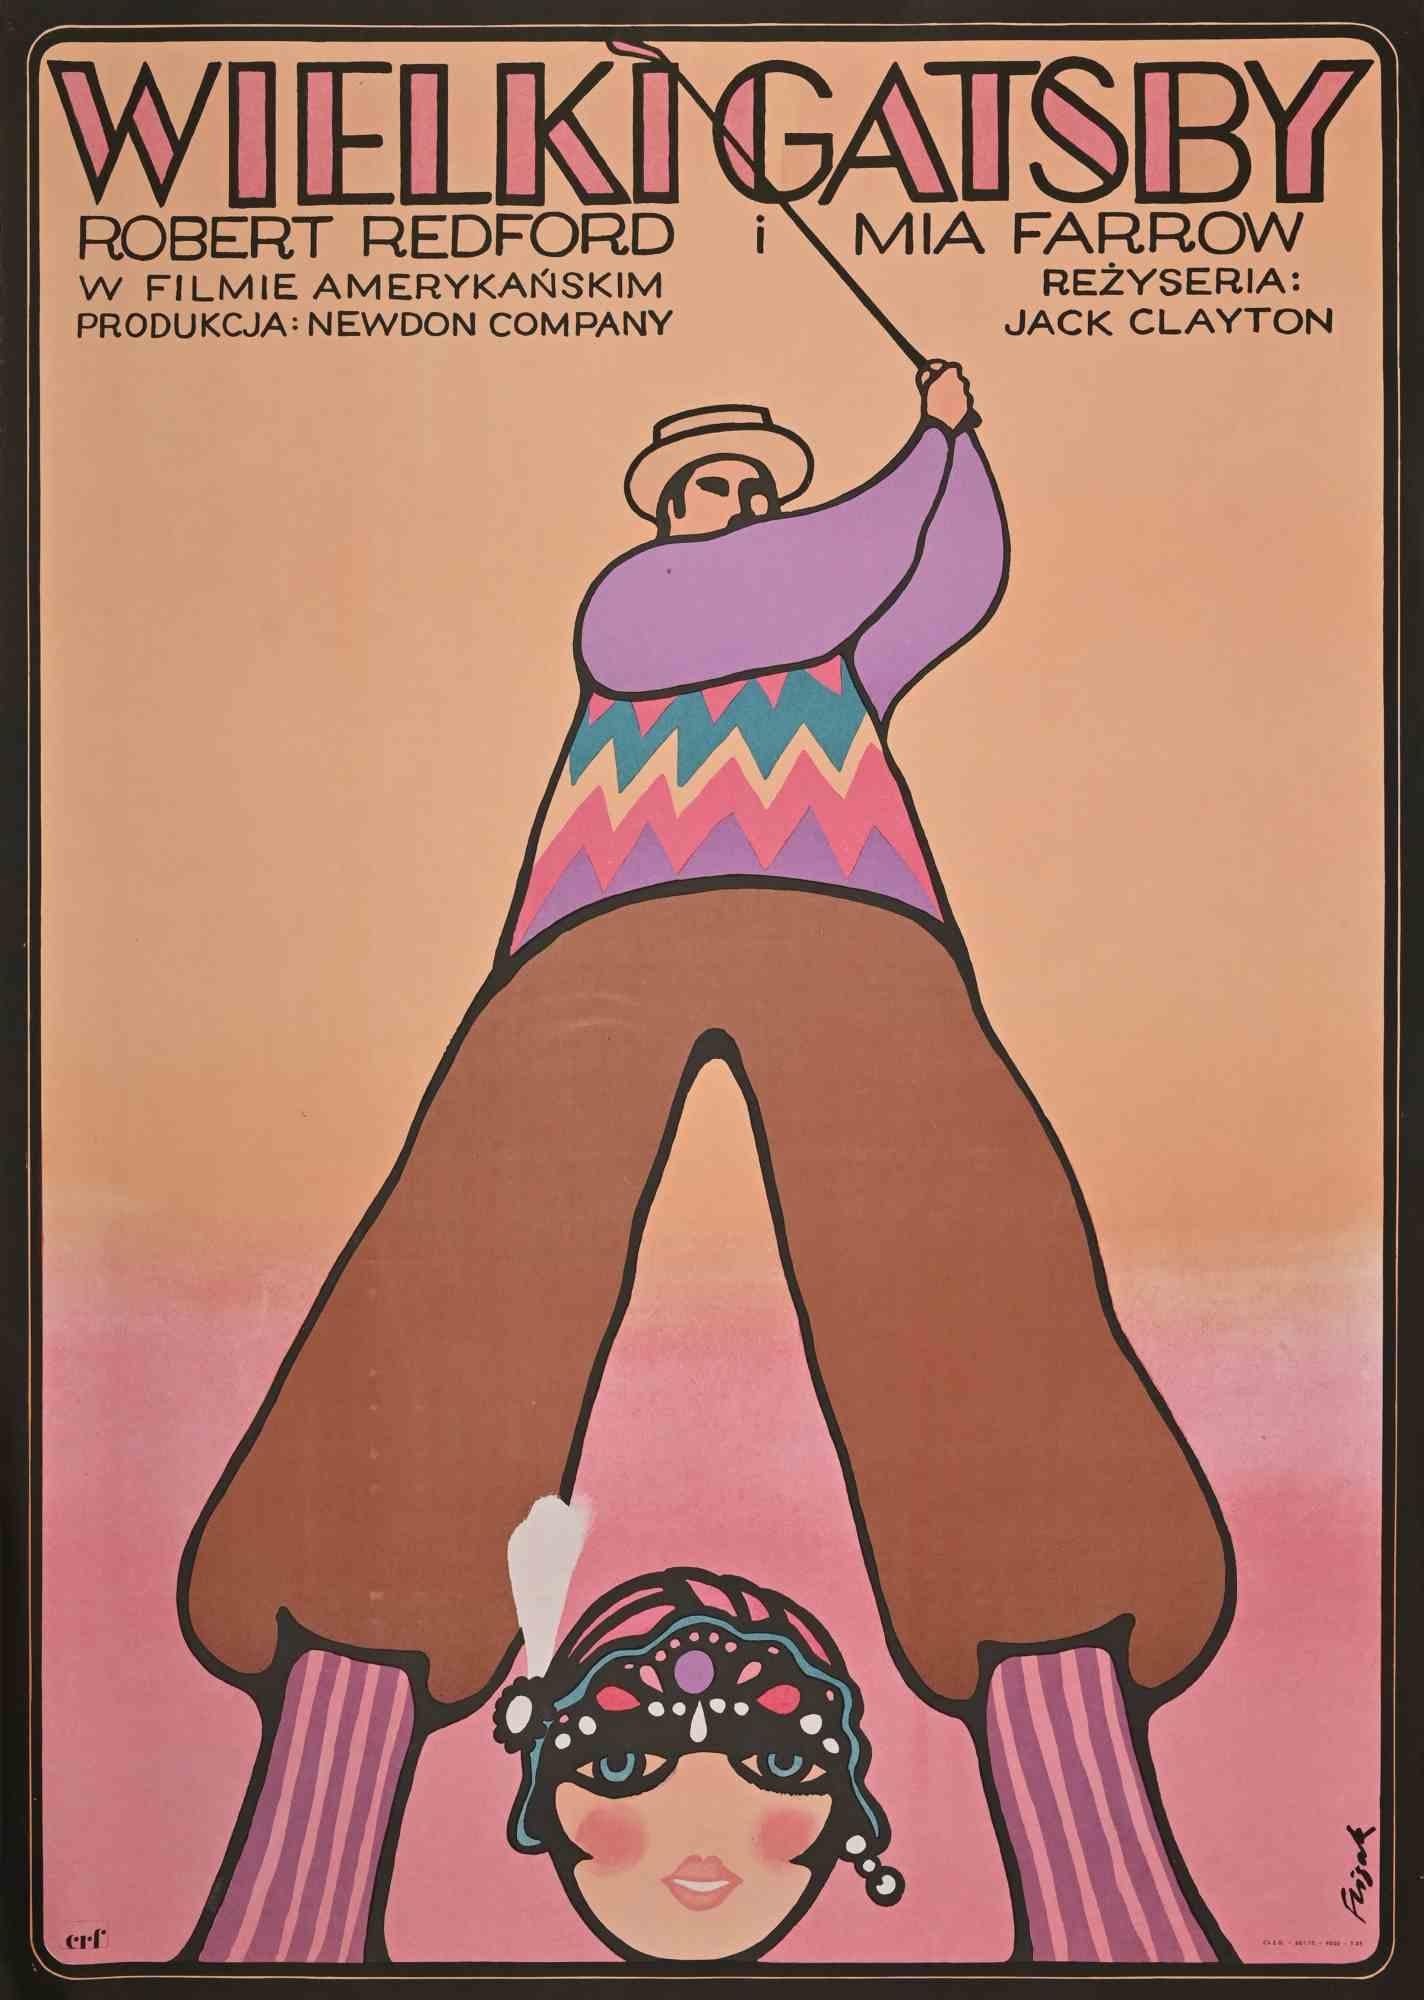 Manifesto Cinema - The Great Gatsby - Vintage Poster by Jerzy Flisak - 1975